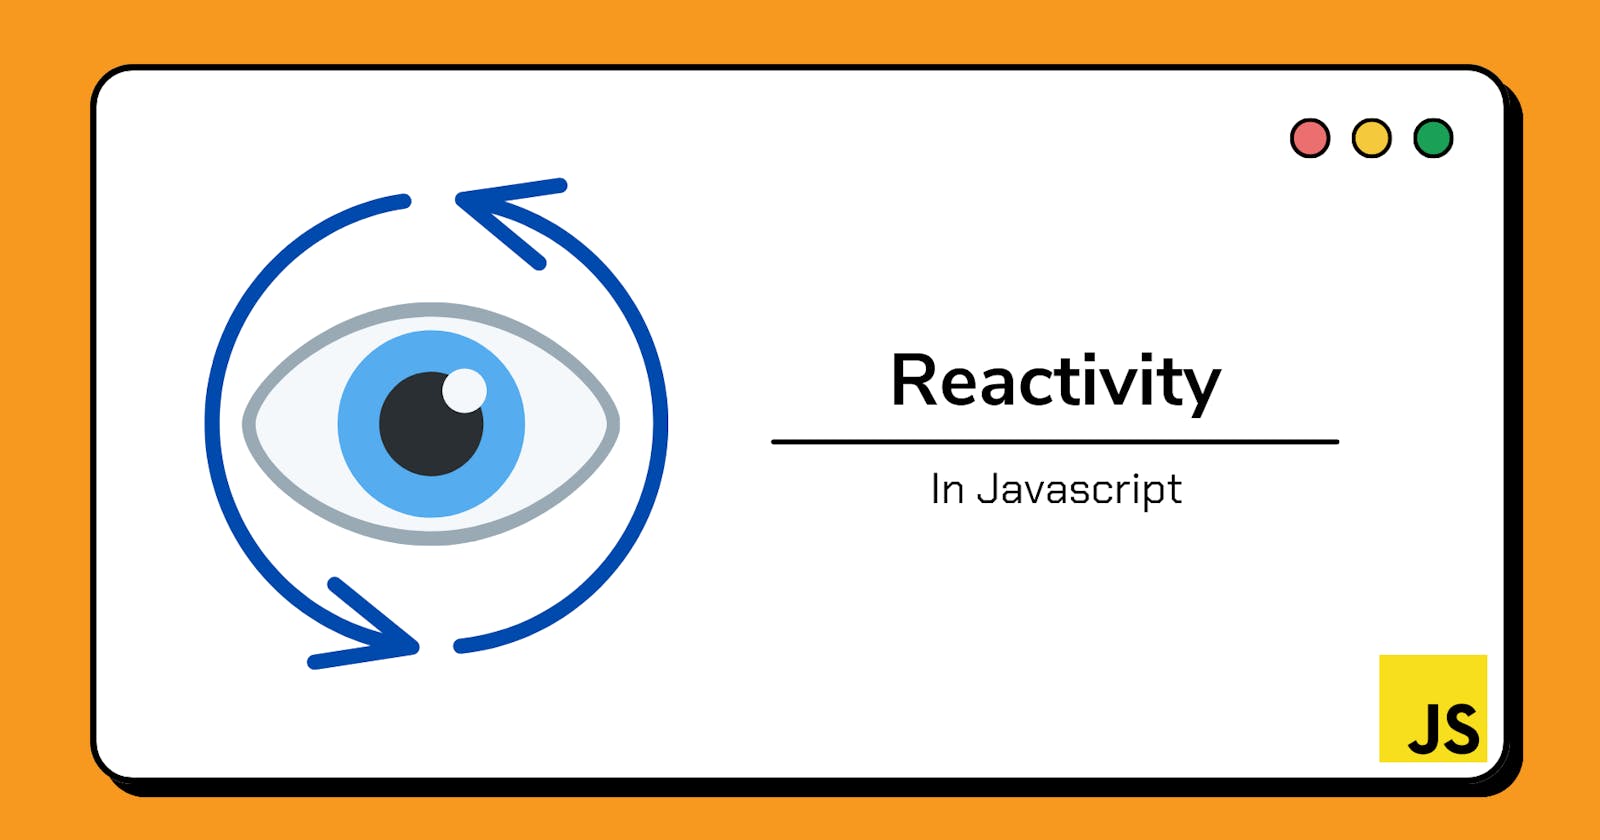 Reactivity in Javascript